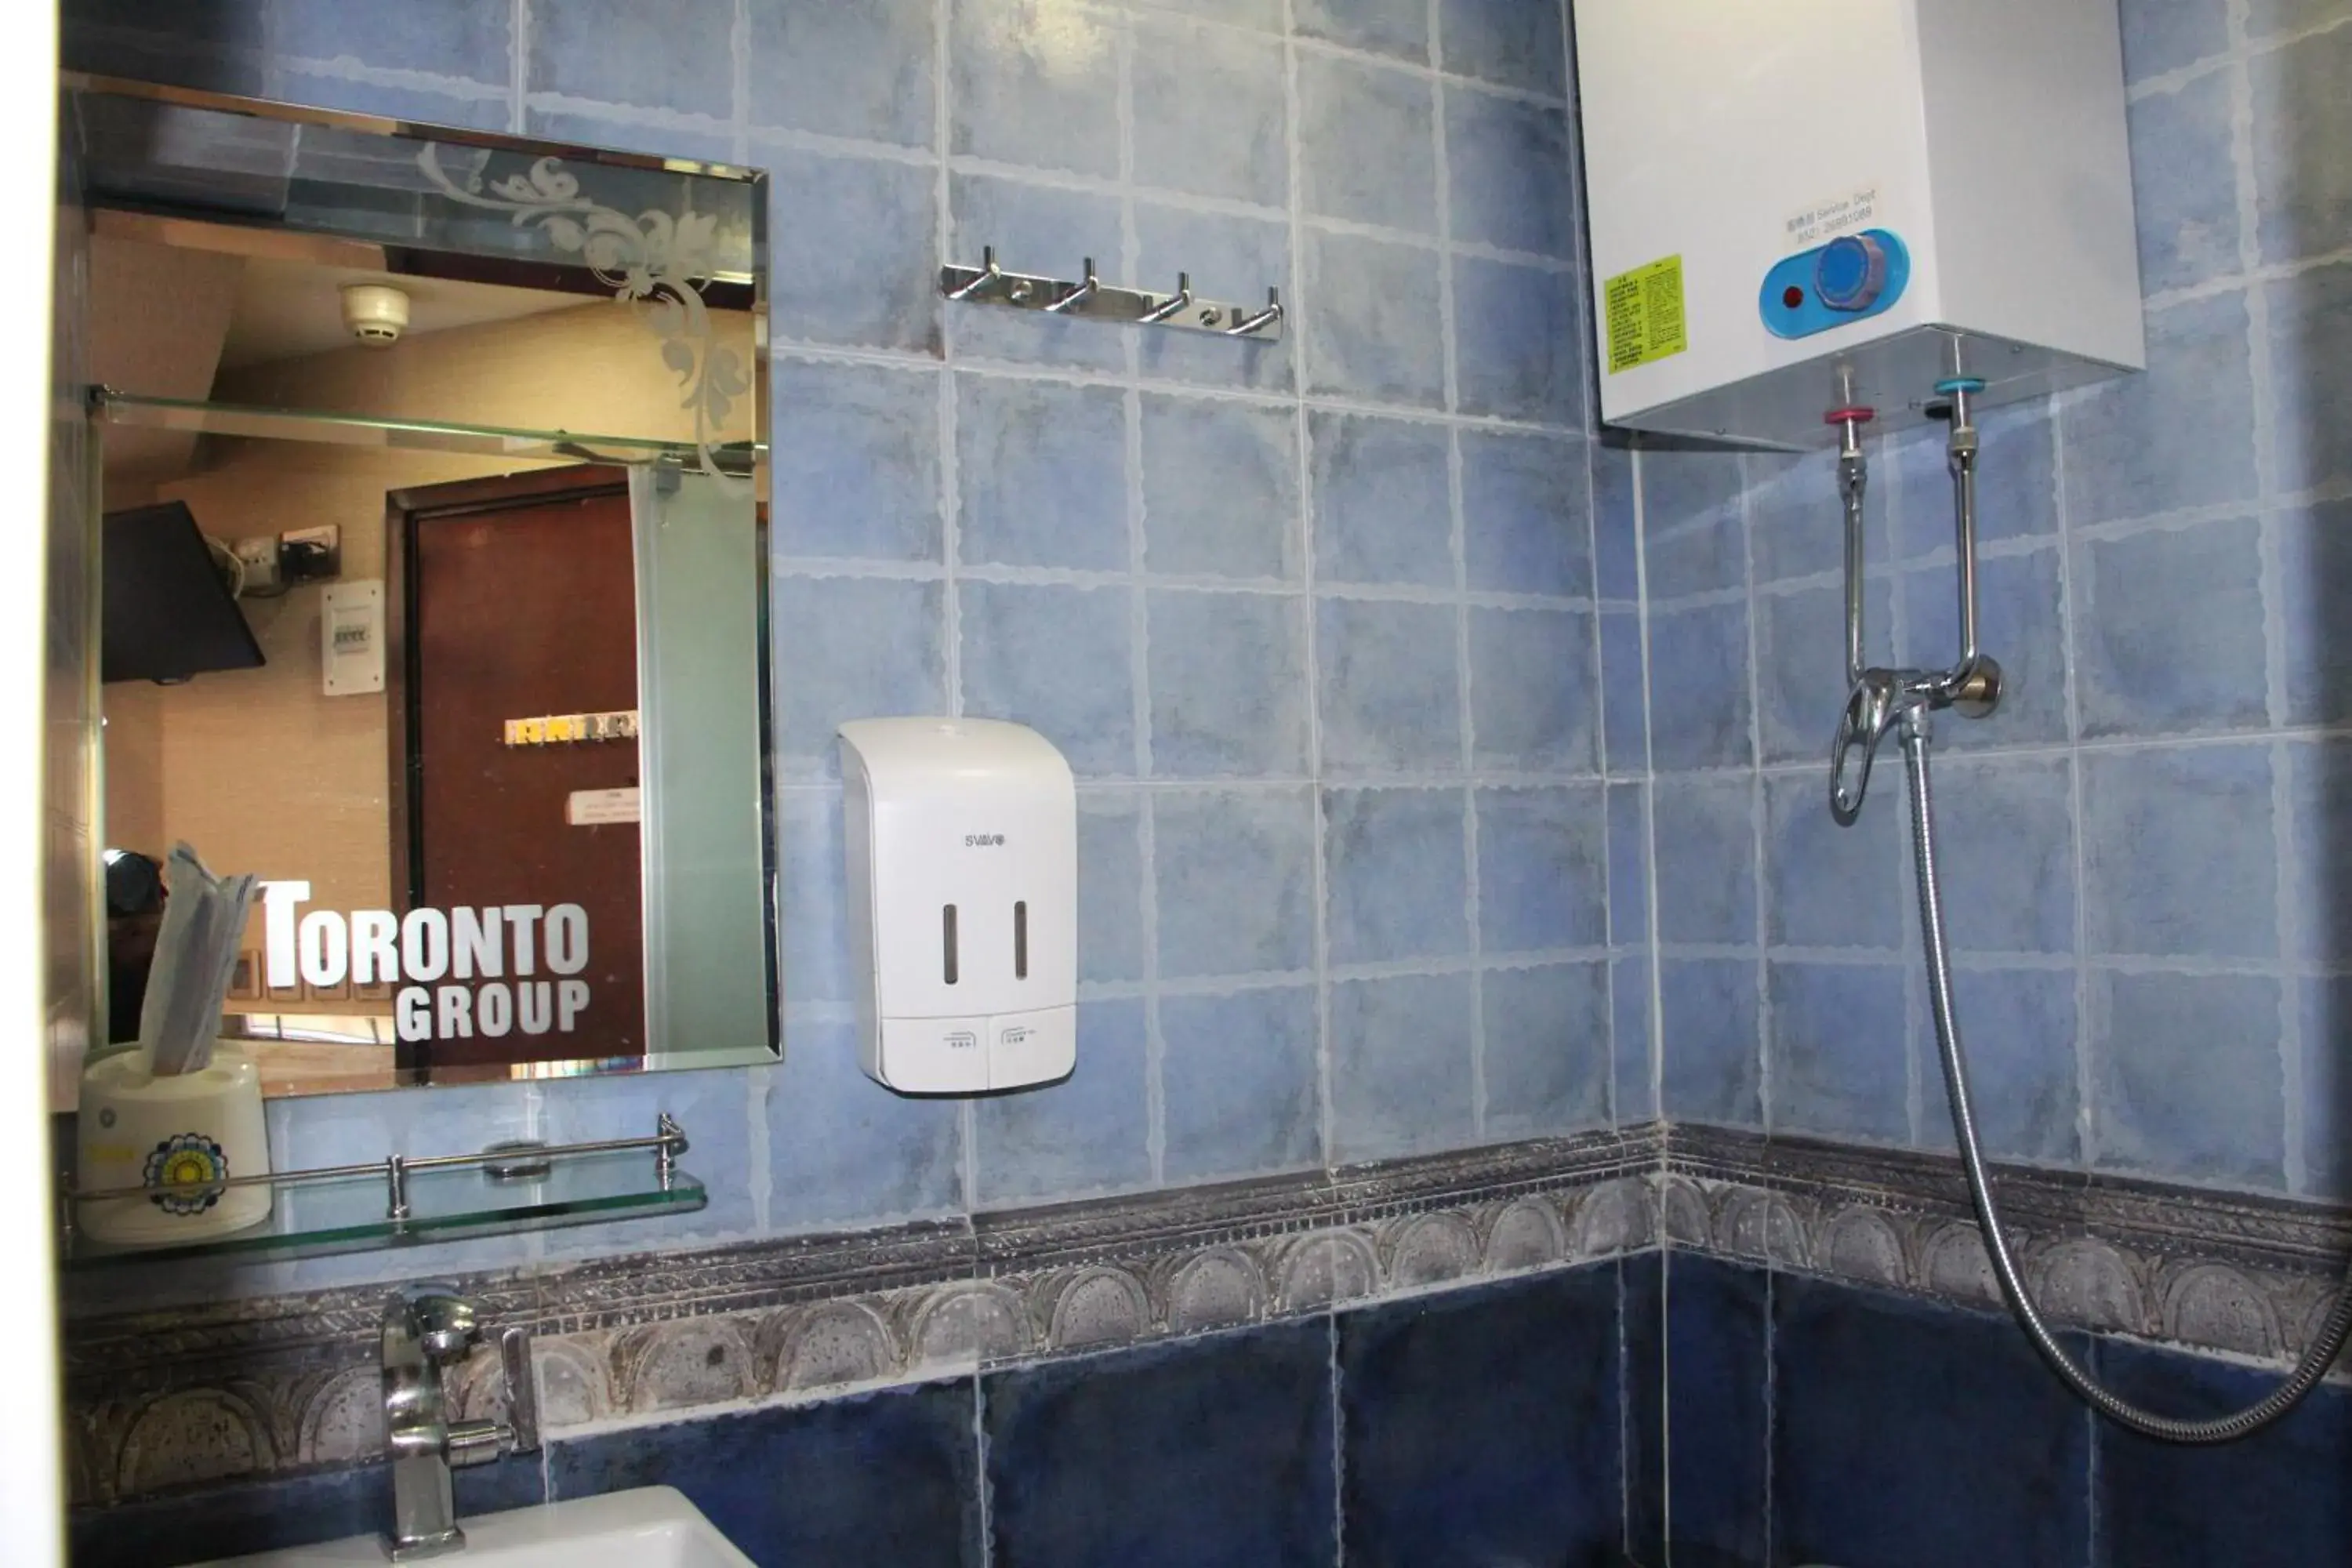 Bathroom in Temple Street Hotel - Toronto Motel Group